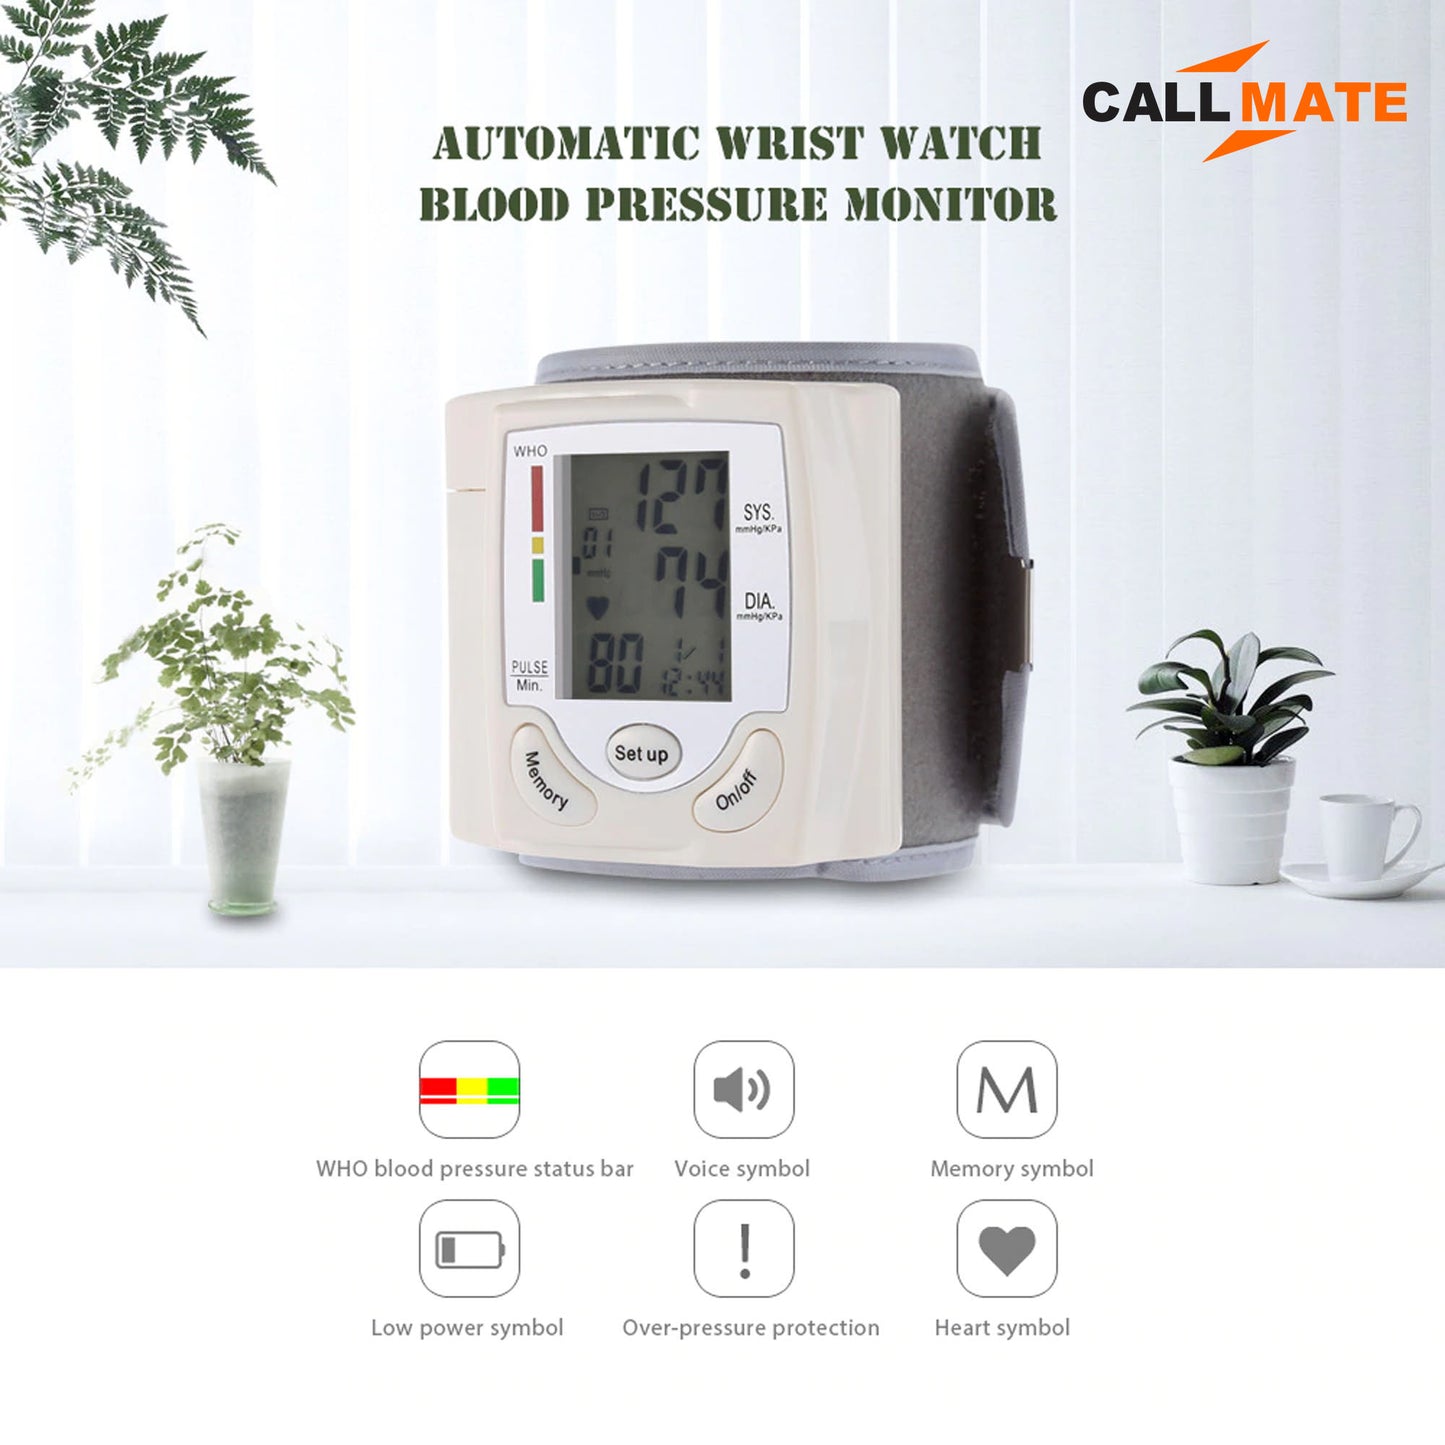 Polaris: The Blood Pressure Monitor